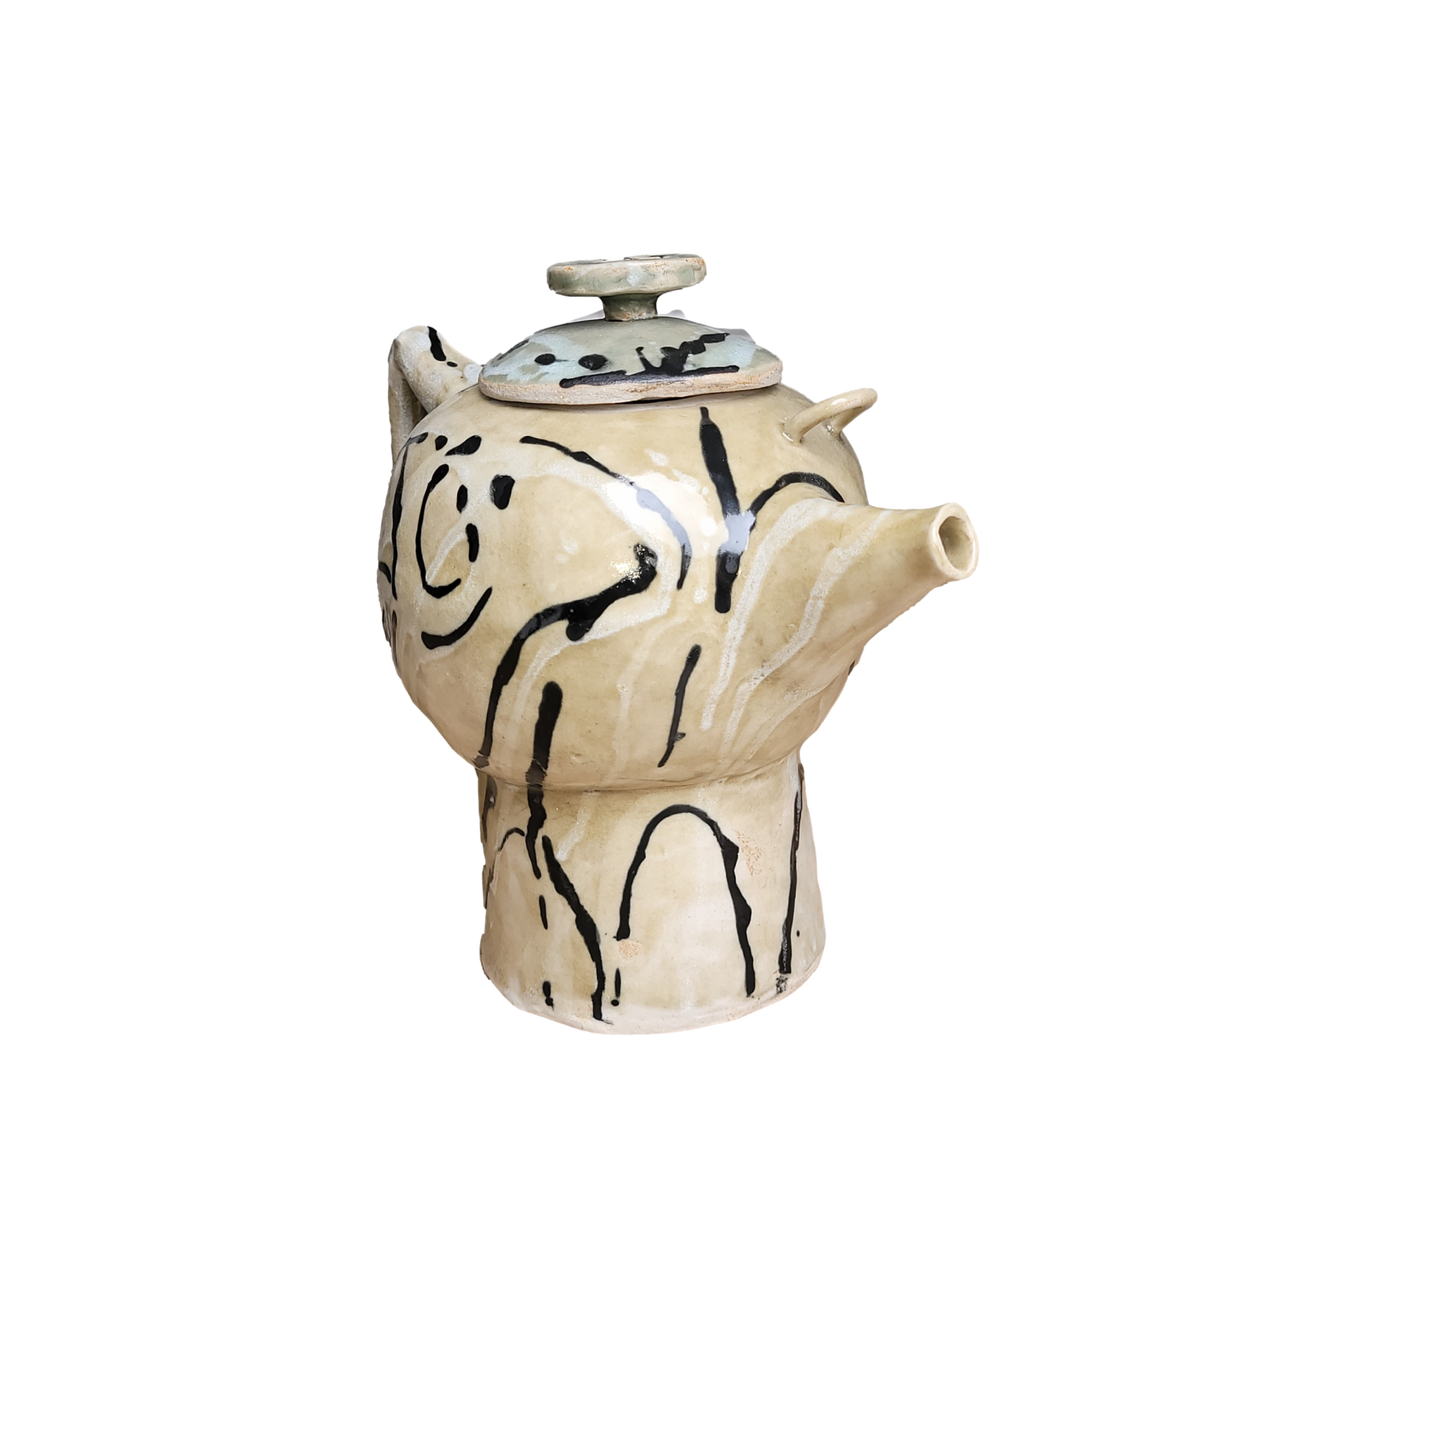 Large Handmade Ceramic Tea Pot